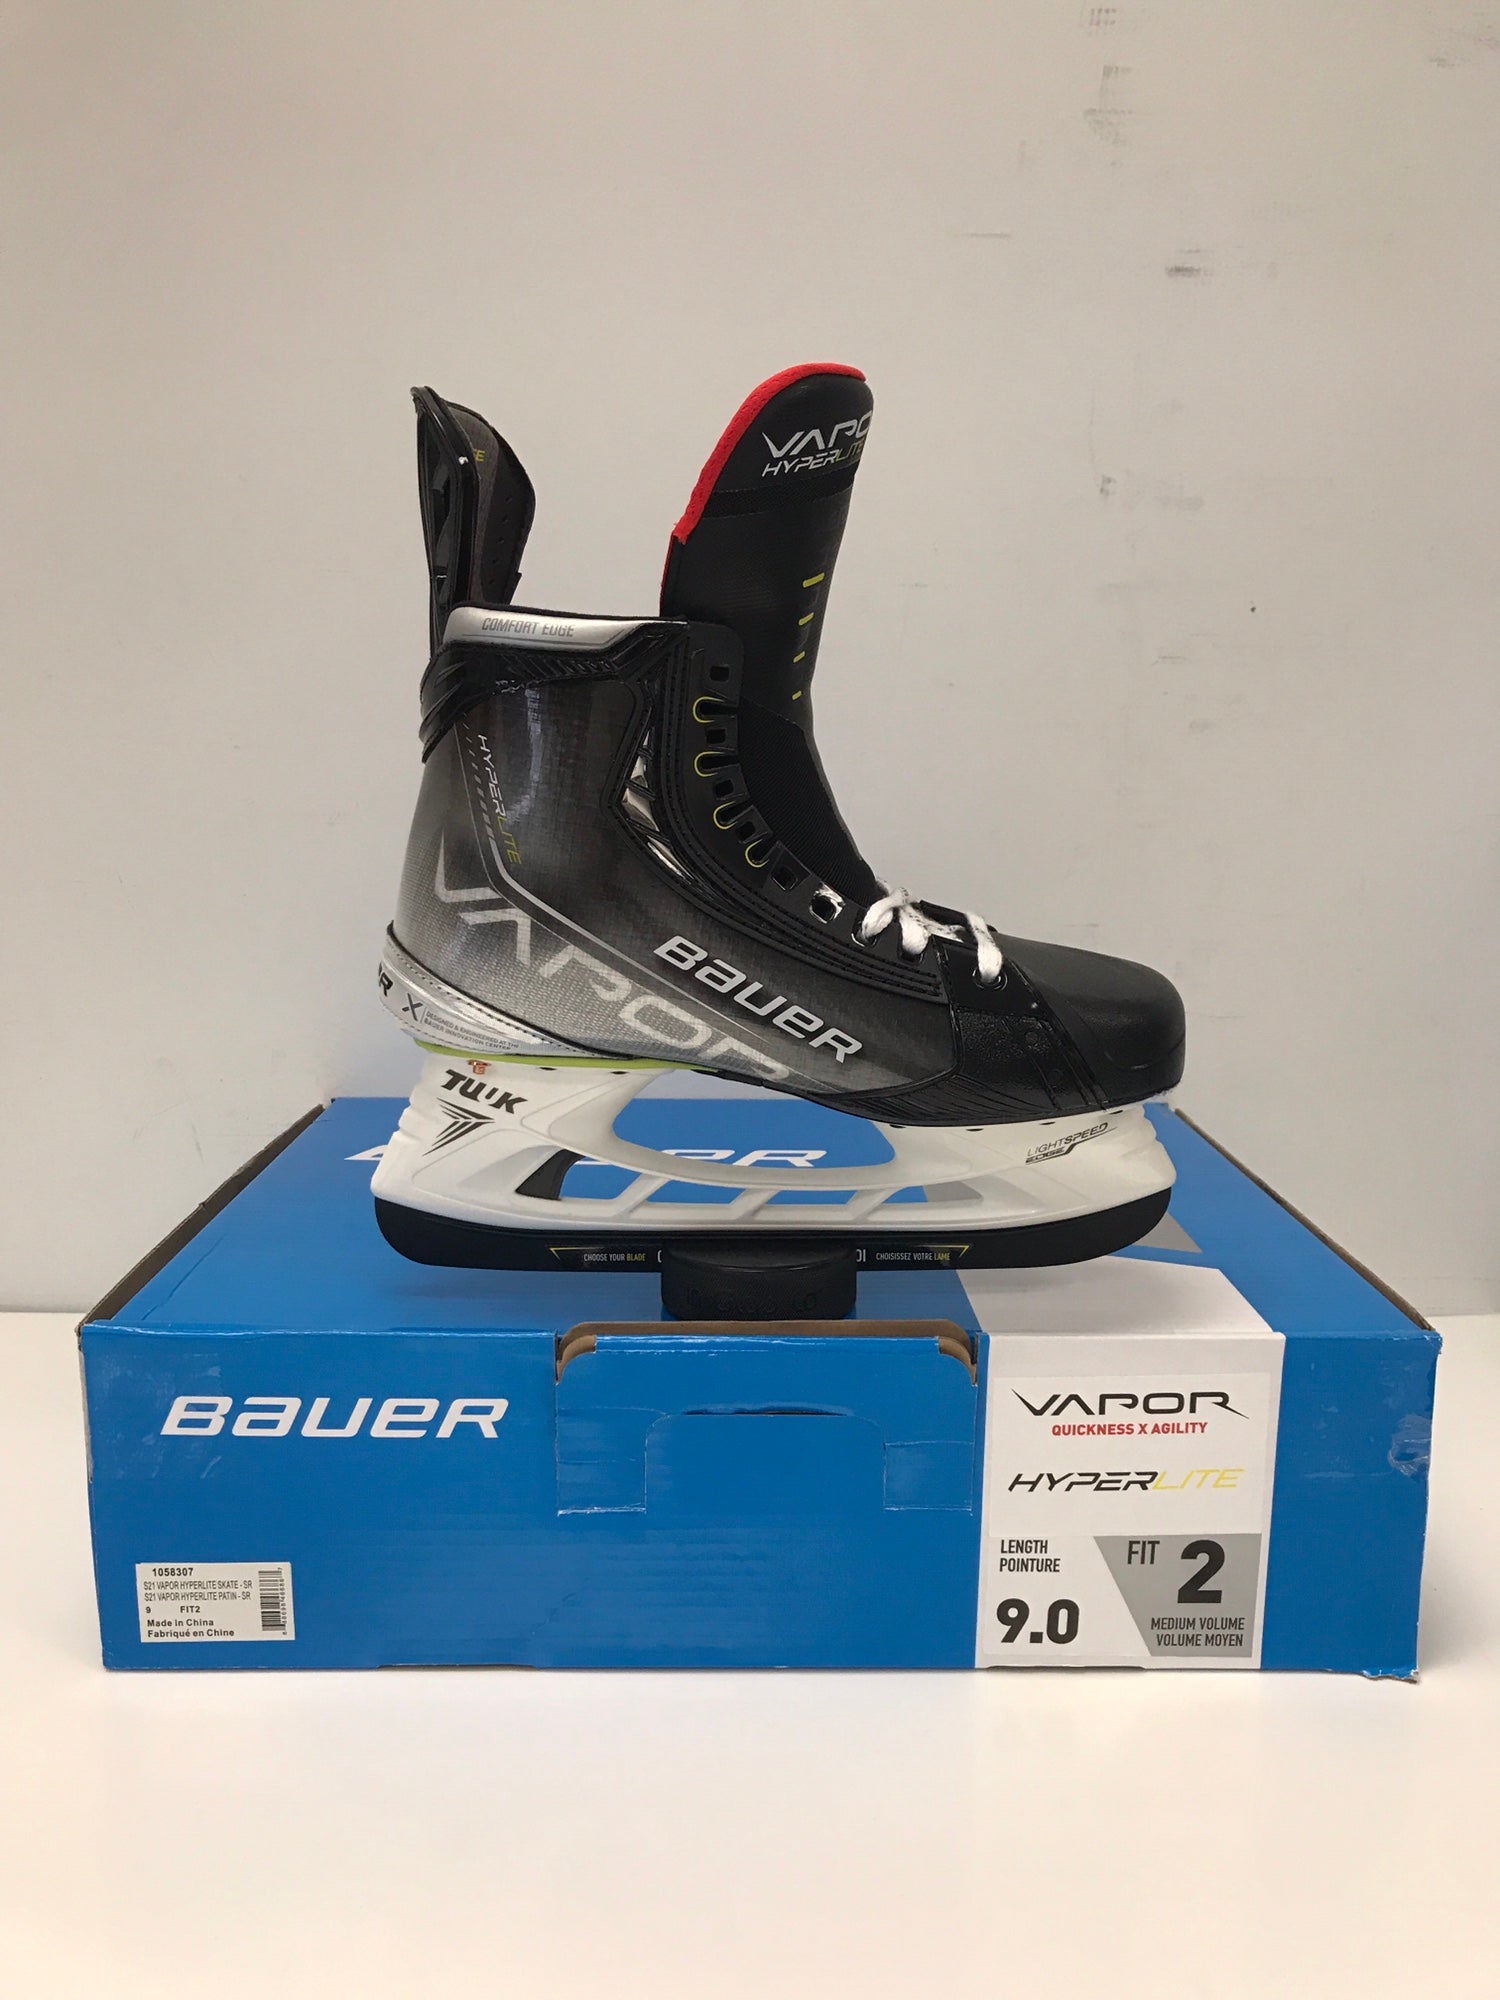 Bauer Vapor Hyperlite Hockey Skates Size 9 Fit 2 SidelineSwap